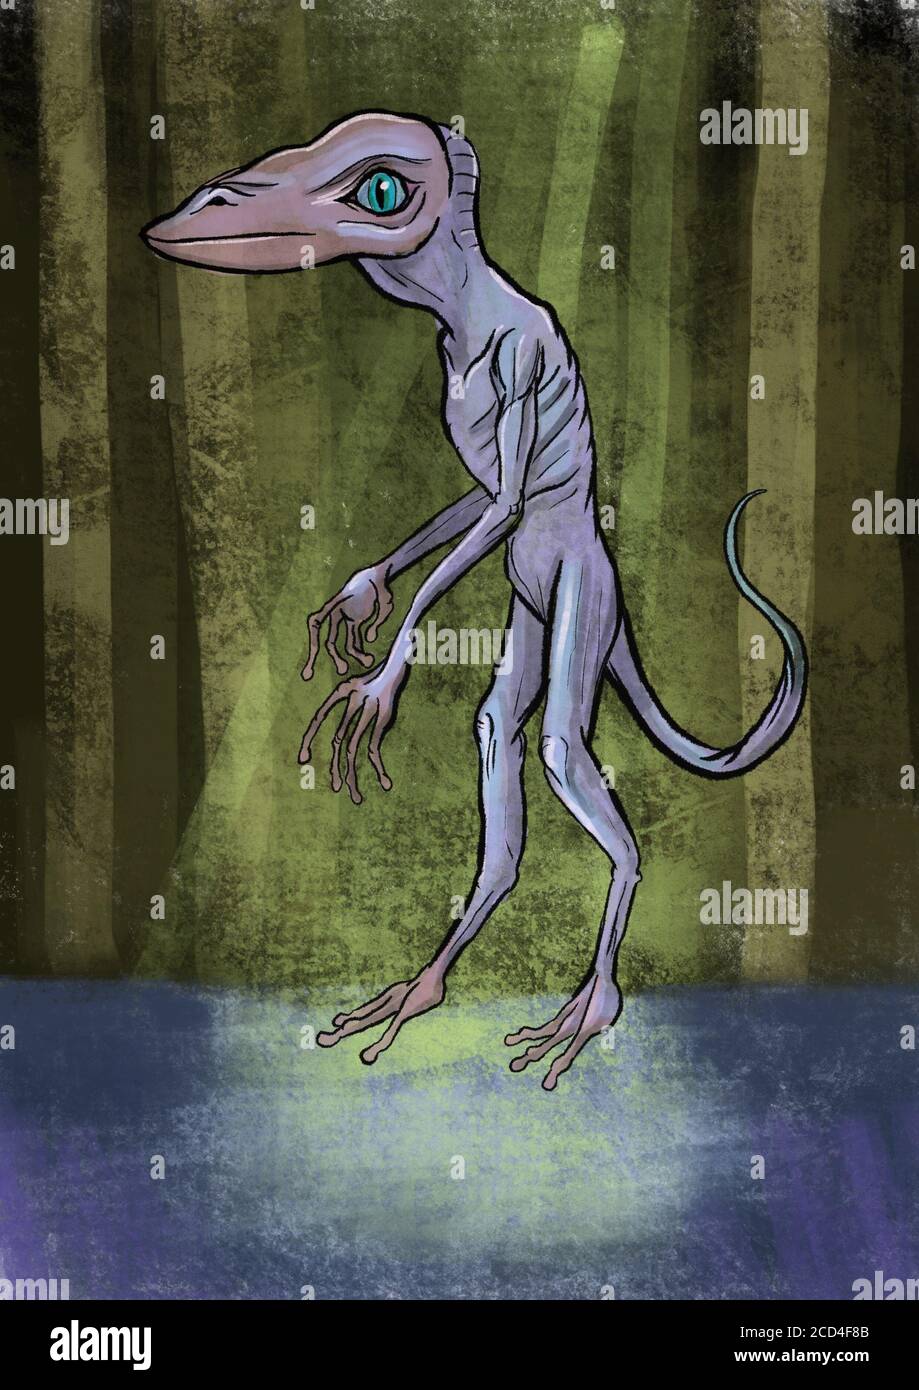 Illustration of a reptilian alien Stock Photo